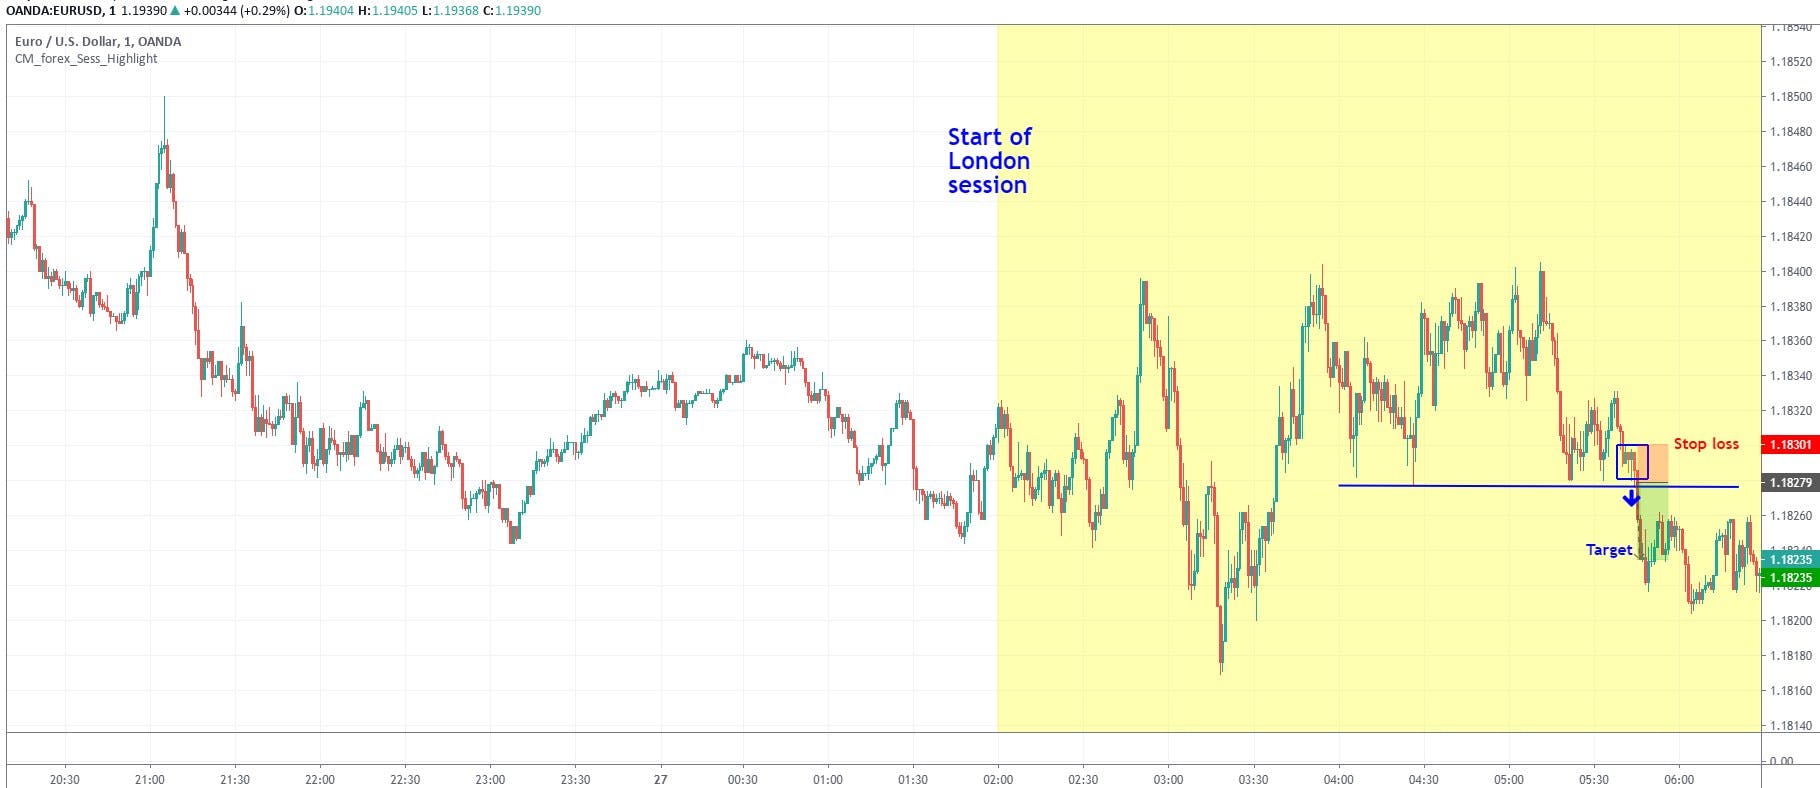 EURUSD technical turnaround EURUSD day trading strategy on 1-minute chart